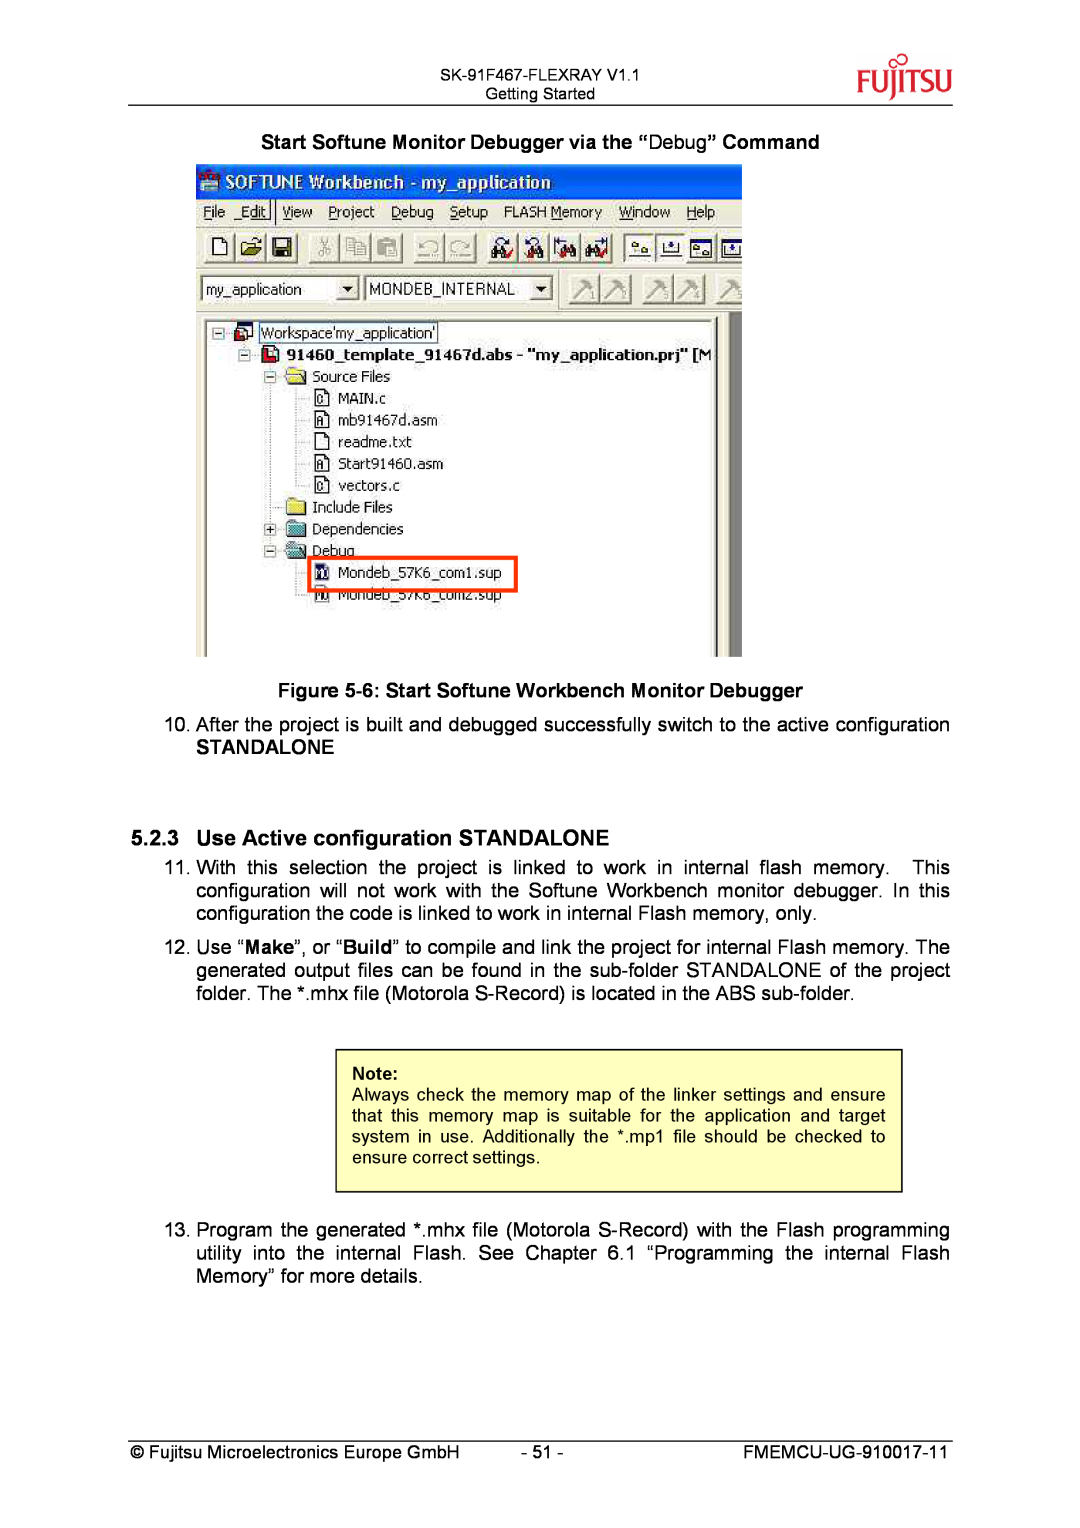 Fujitsu MB88121 SERIES manual Use Active configuration STANDALONE, Start Softune Monitor Debugger via the “Debug” Command 